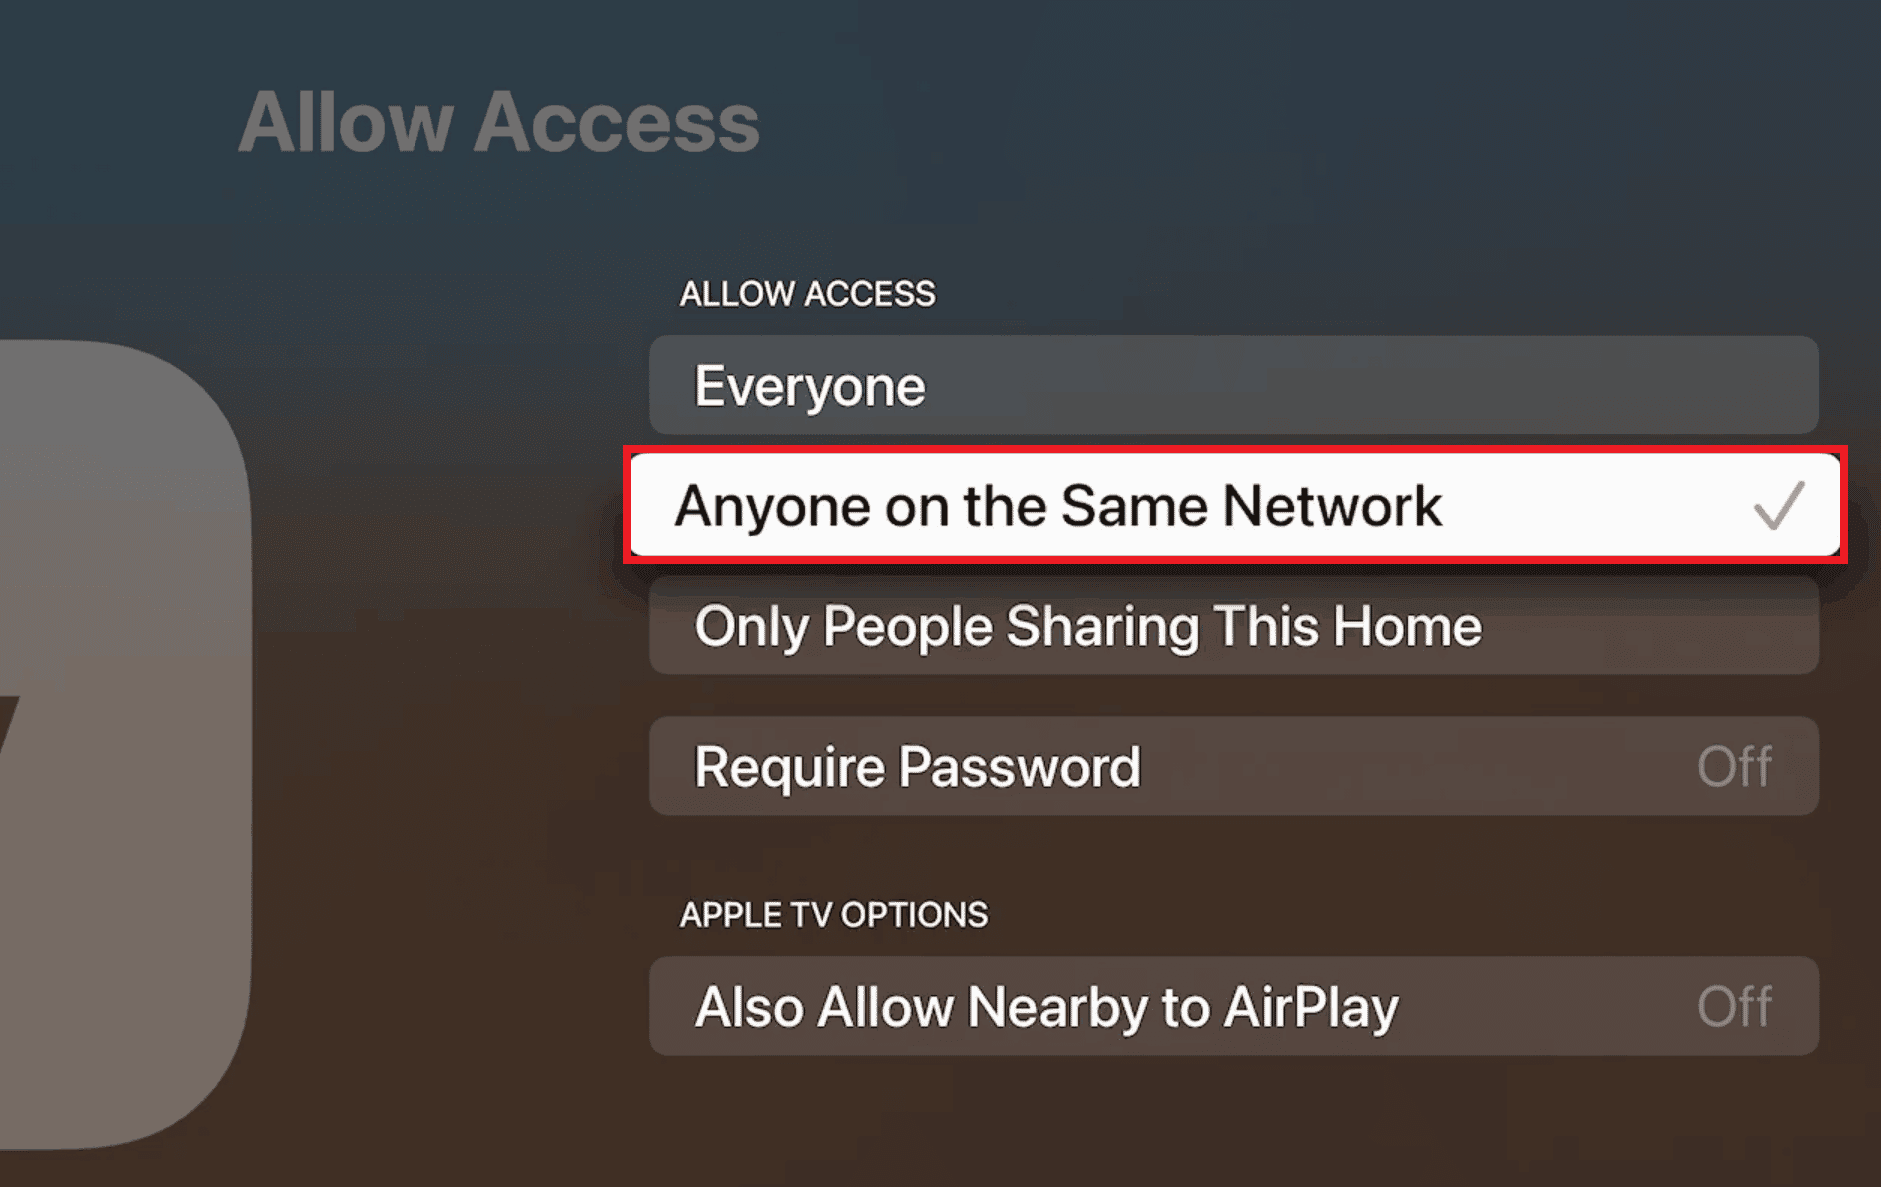 Choose Anyone on the Same Network